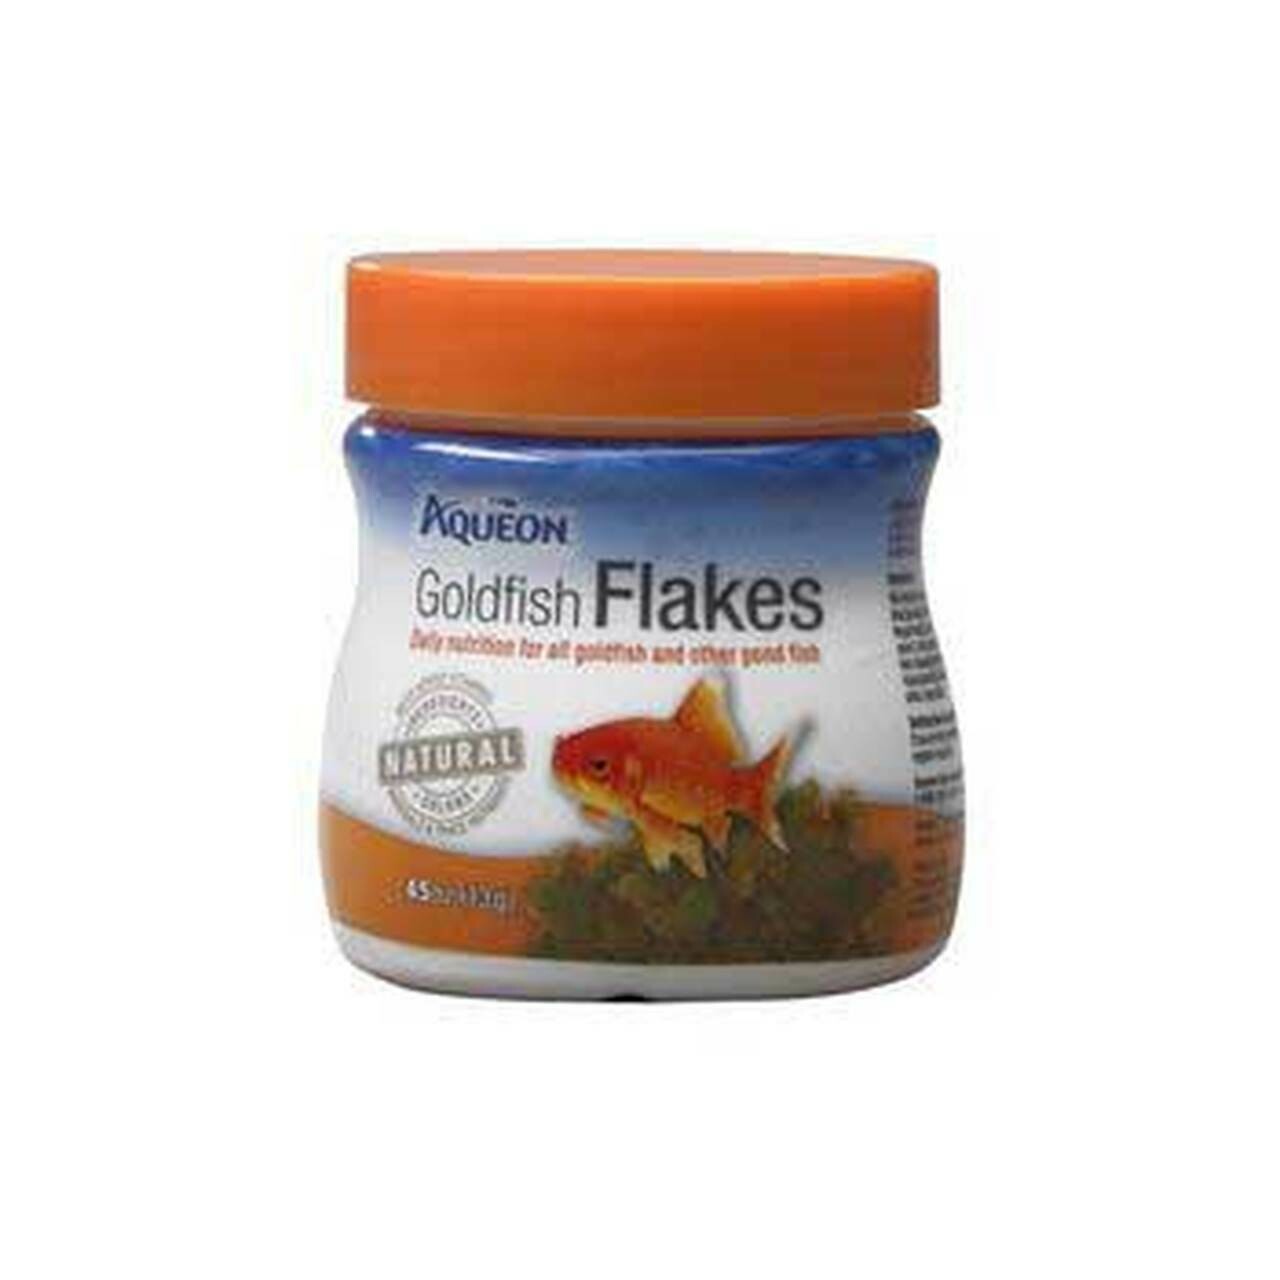 Aqueon Goldfish Flakes Fish Food .45oz Jar